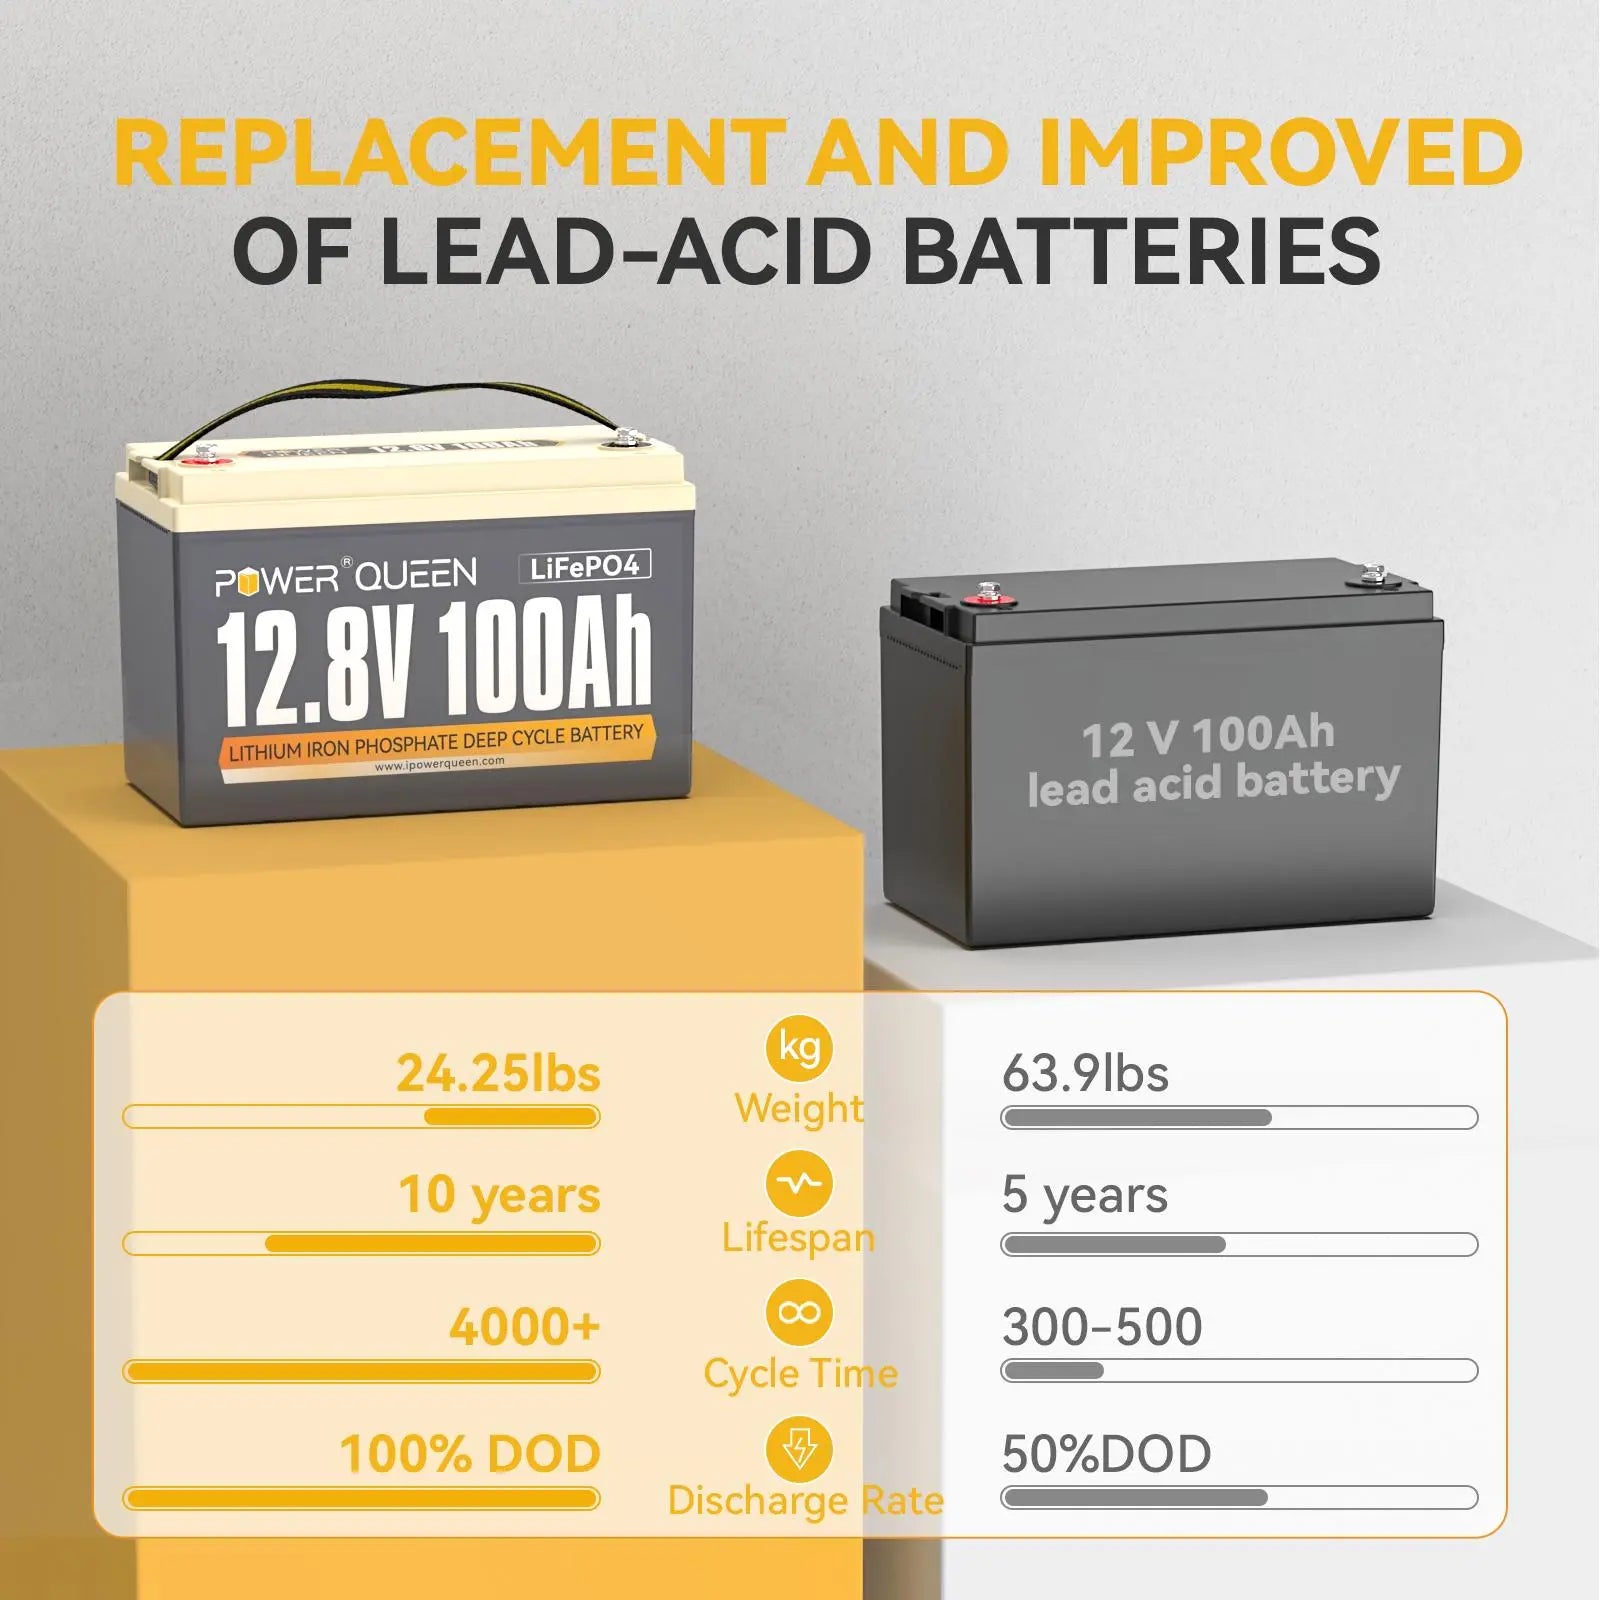 12.8V 100Ah lithium battery vs 12V 100Ah lead acid battery